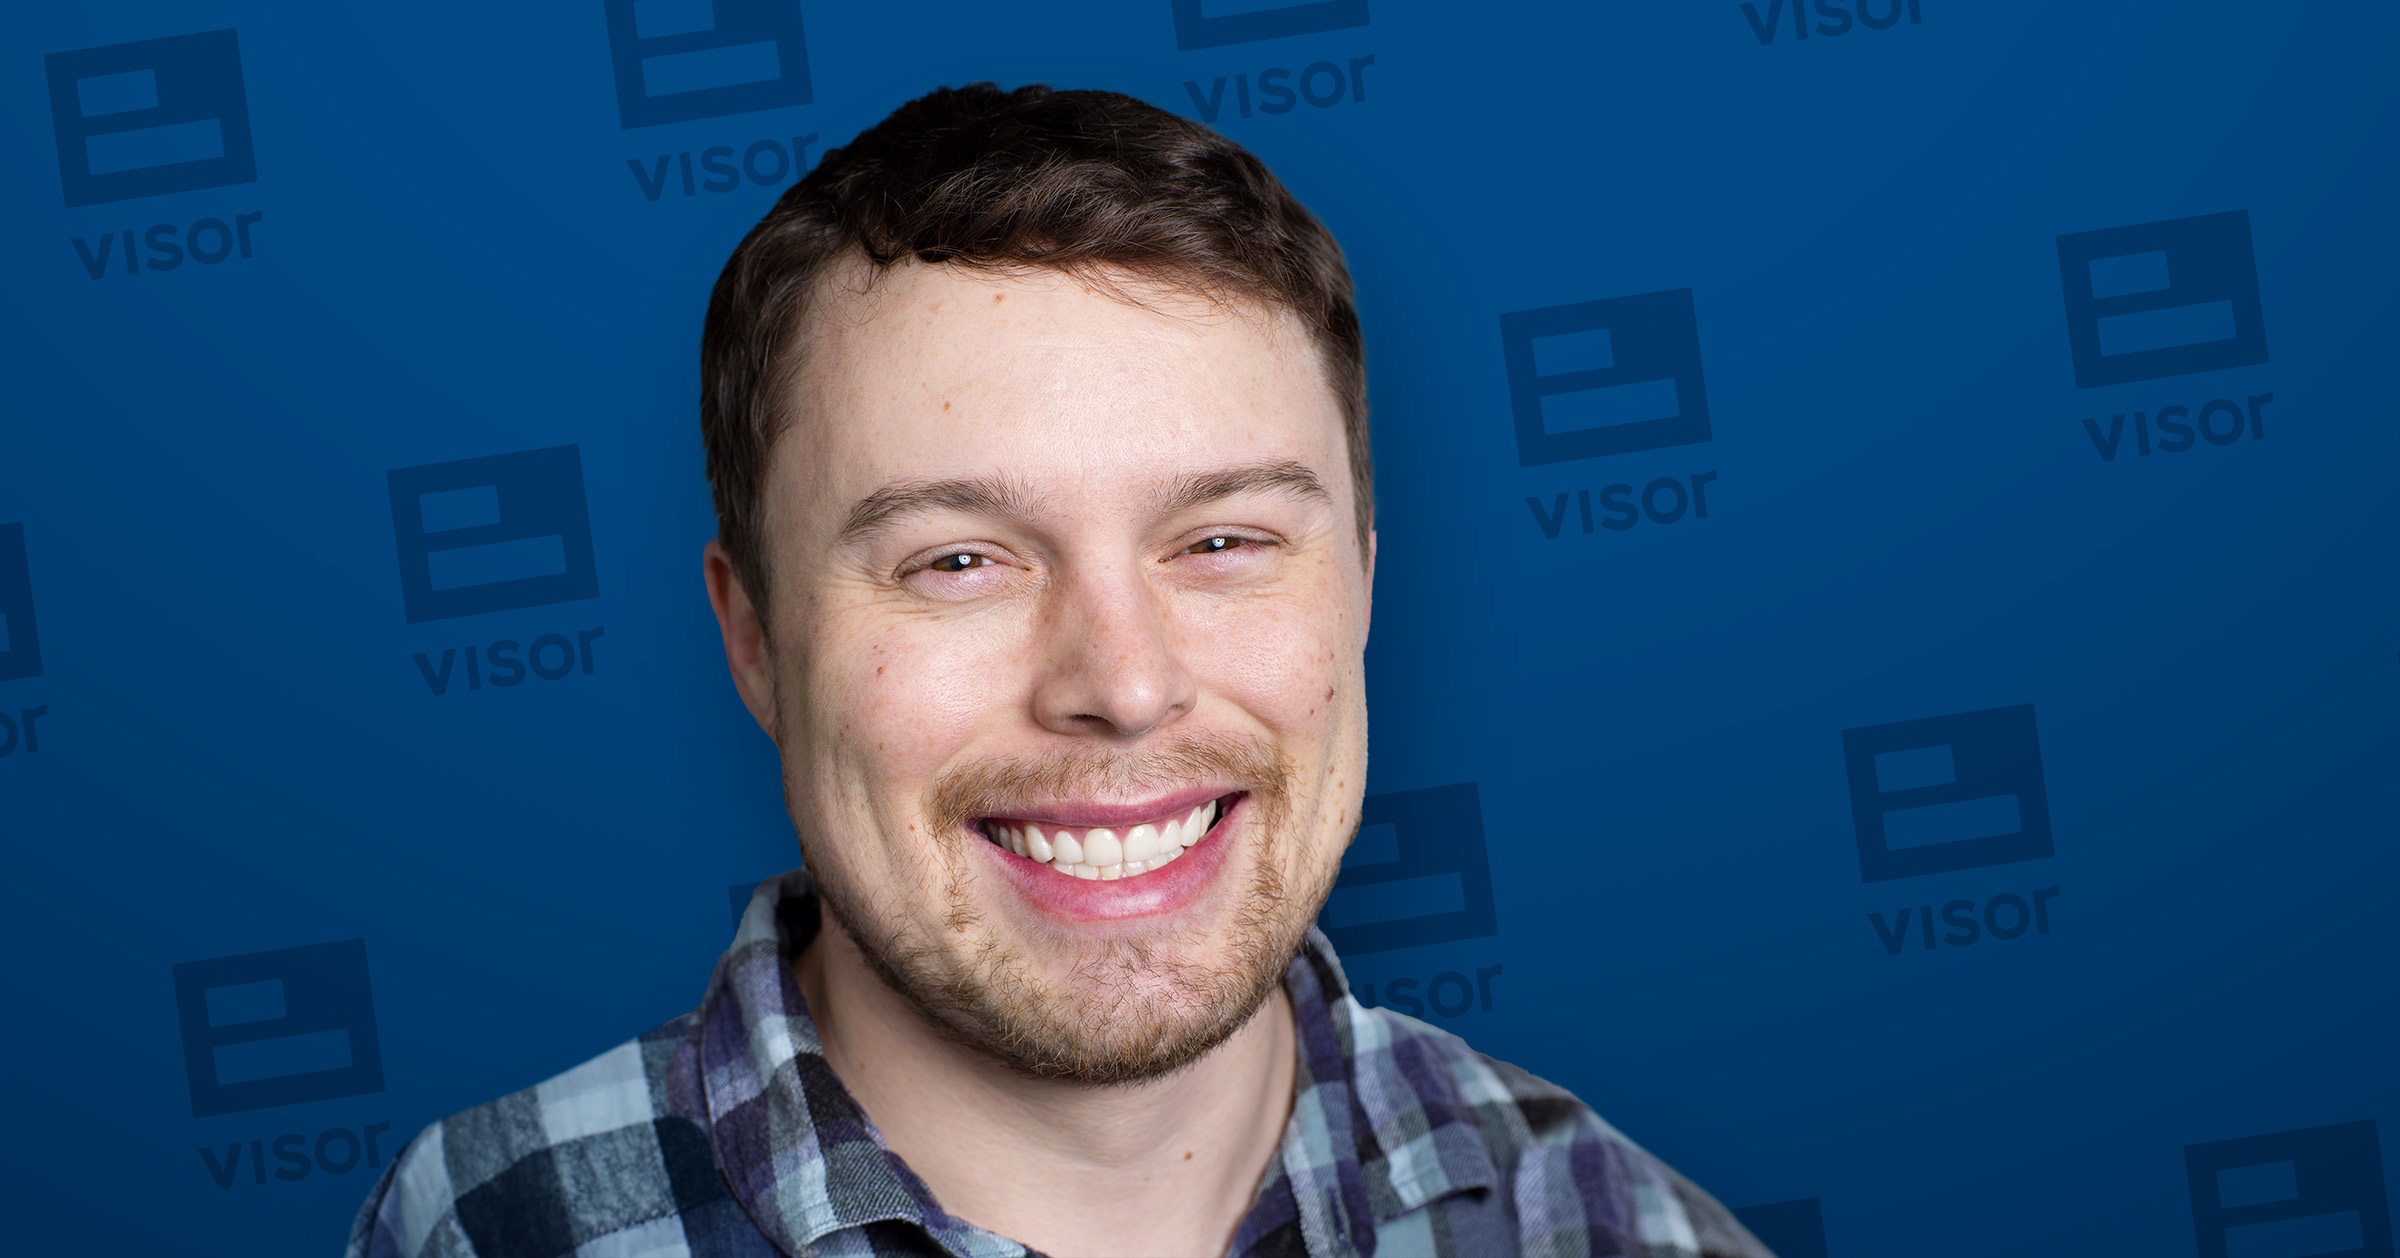 Visor software engineer Tyler Diminick